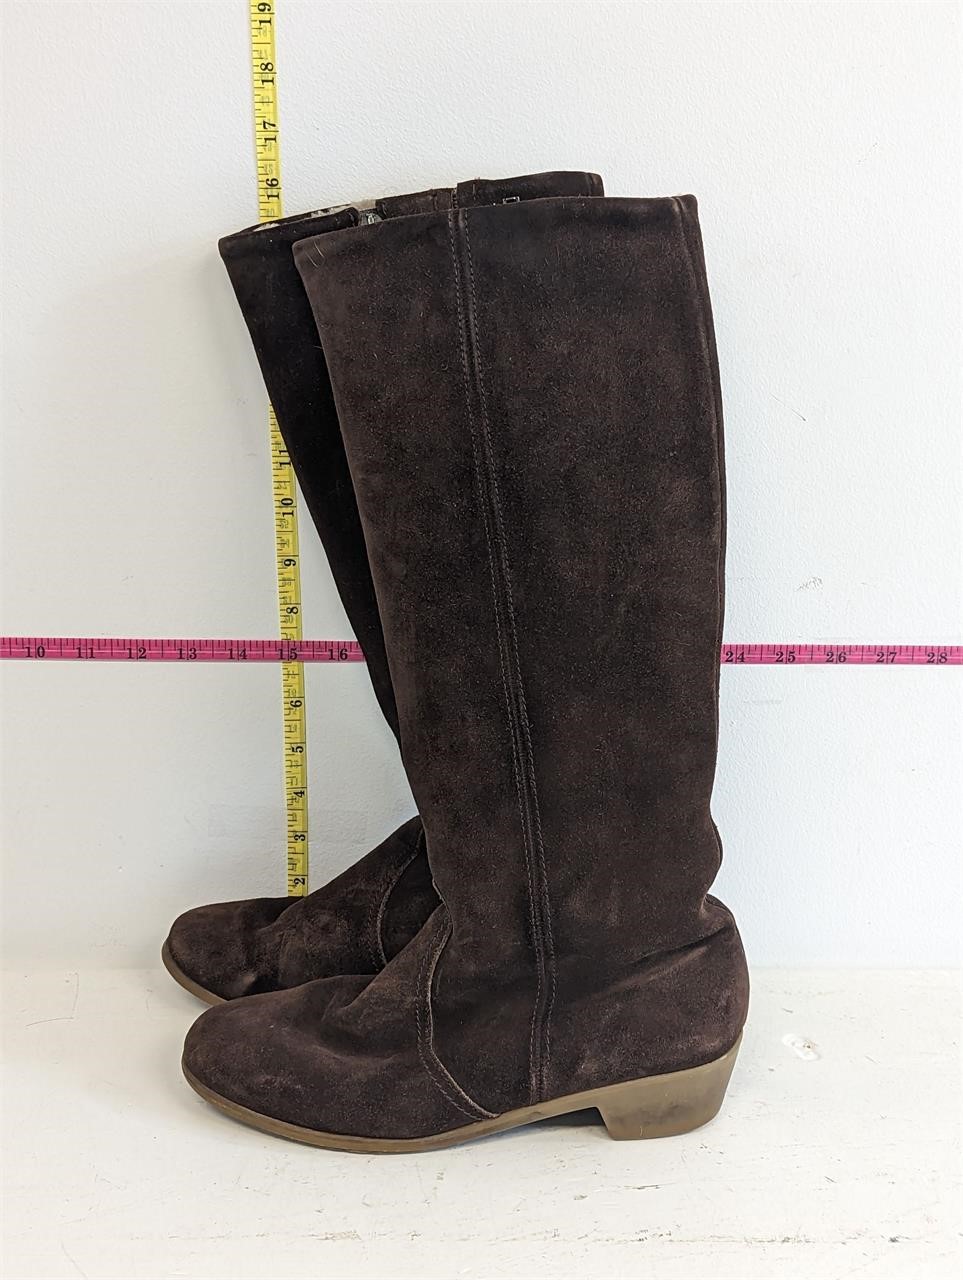 Morlands Sheepskin Weatherproof Boots (8.5 US)